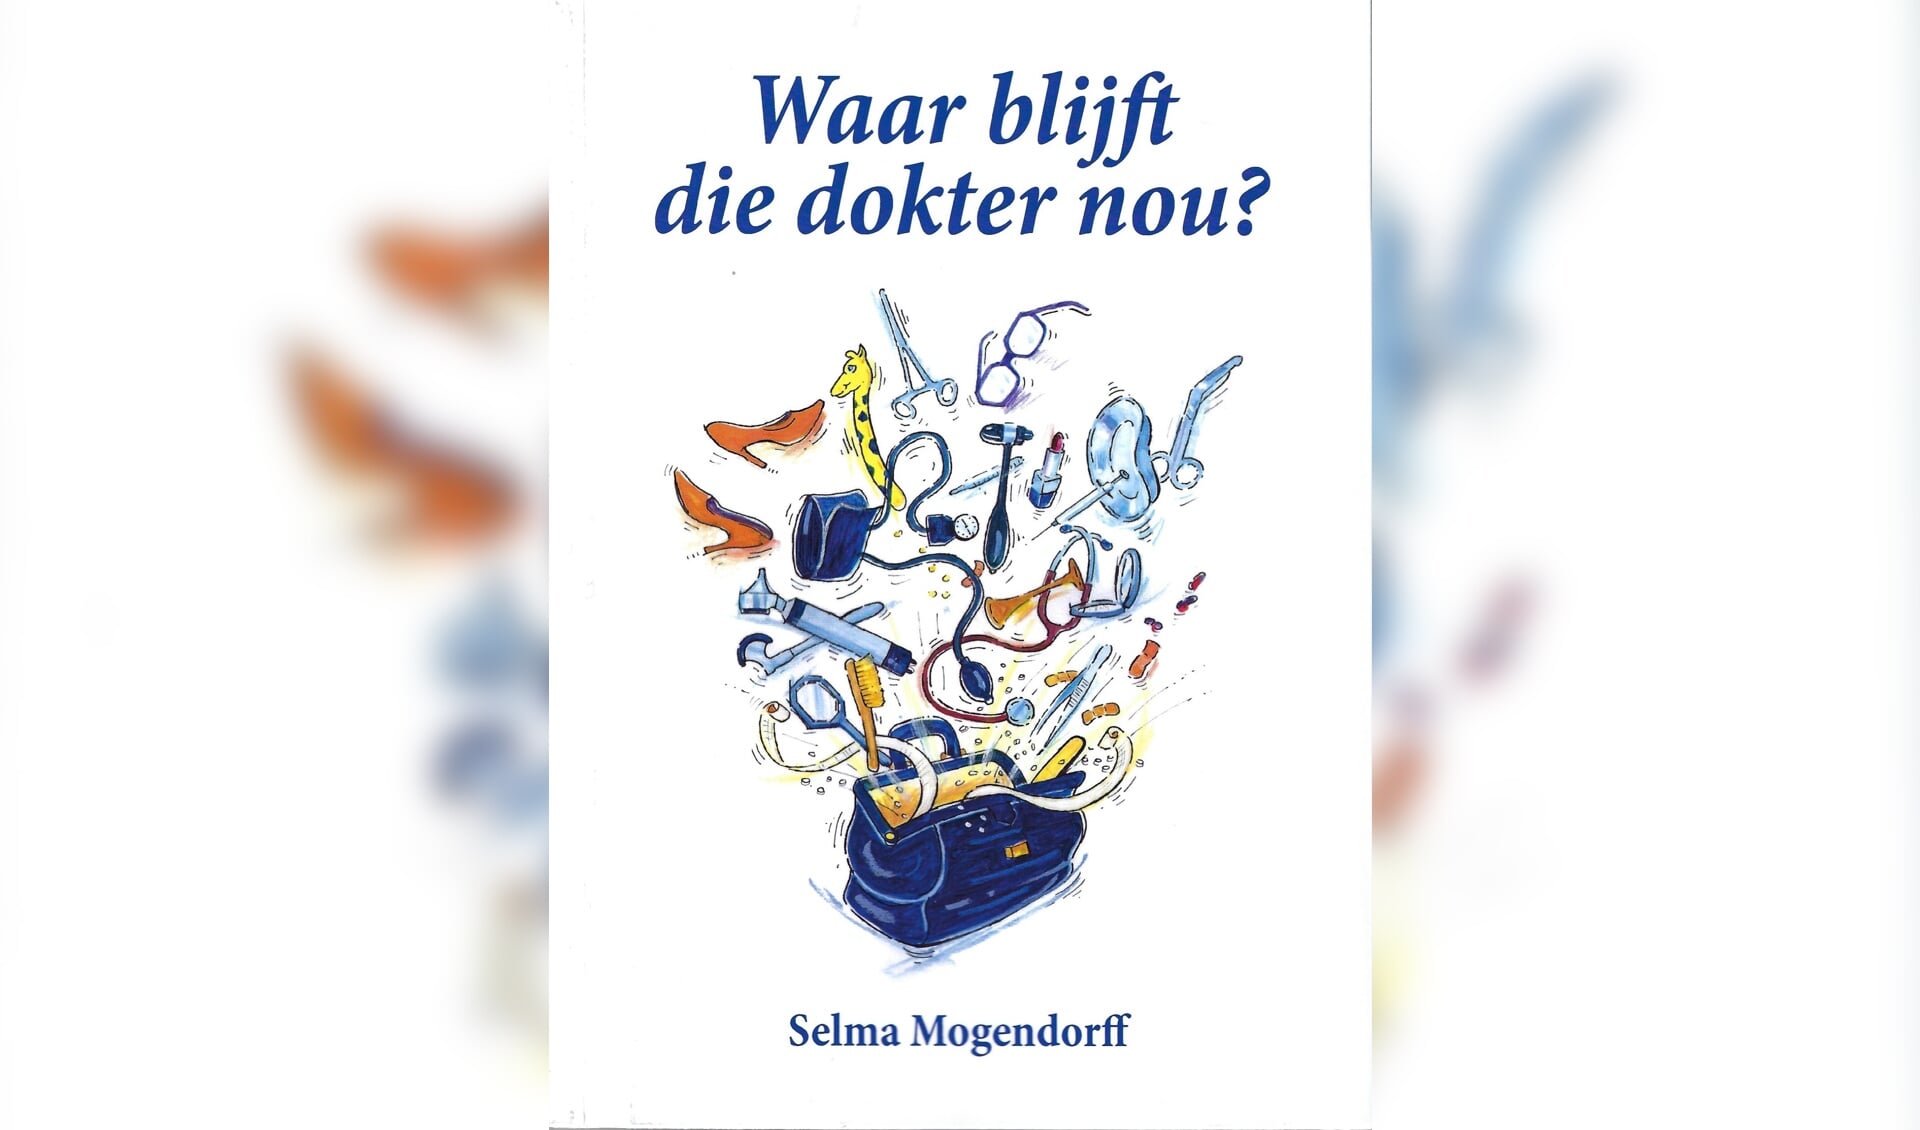 'Waar blijft die dokter nou?' van Selma Mögendorff